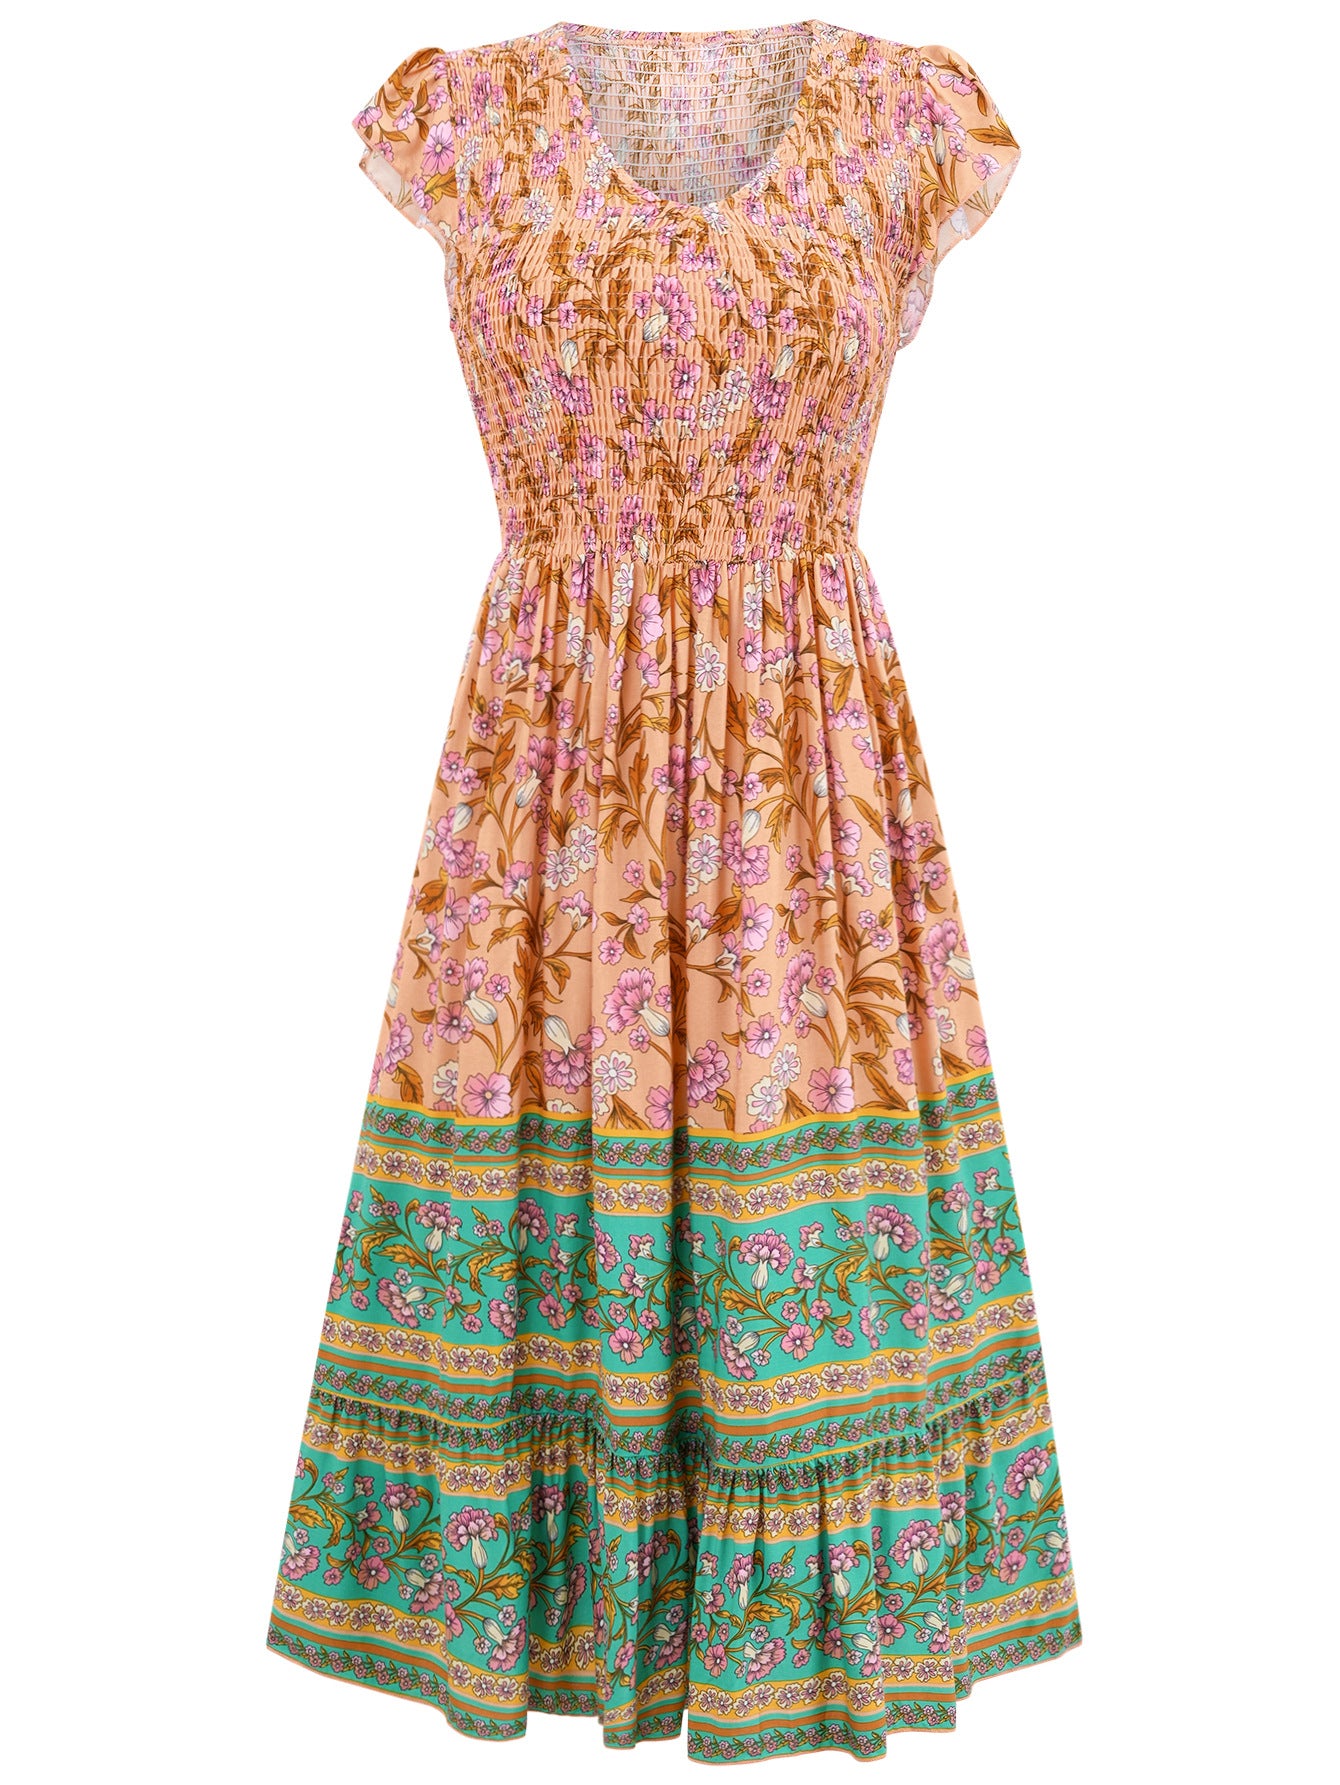 New Flowers Print V-neck Dress Summer Casual Ruffle Sleeveless Dresses Bohemian Holiday Beach Dress For Womens Clothing